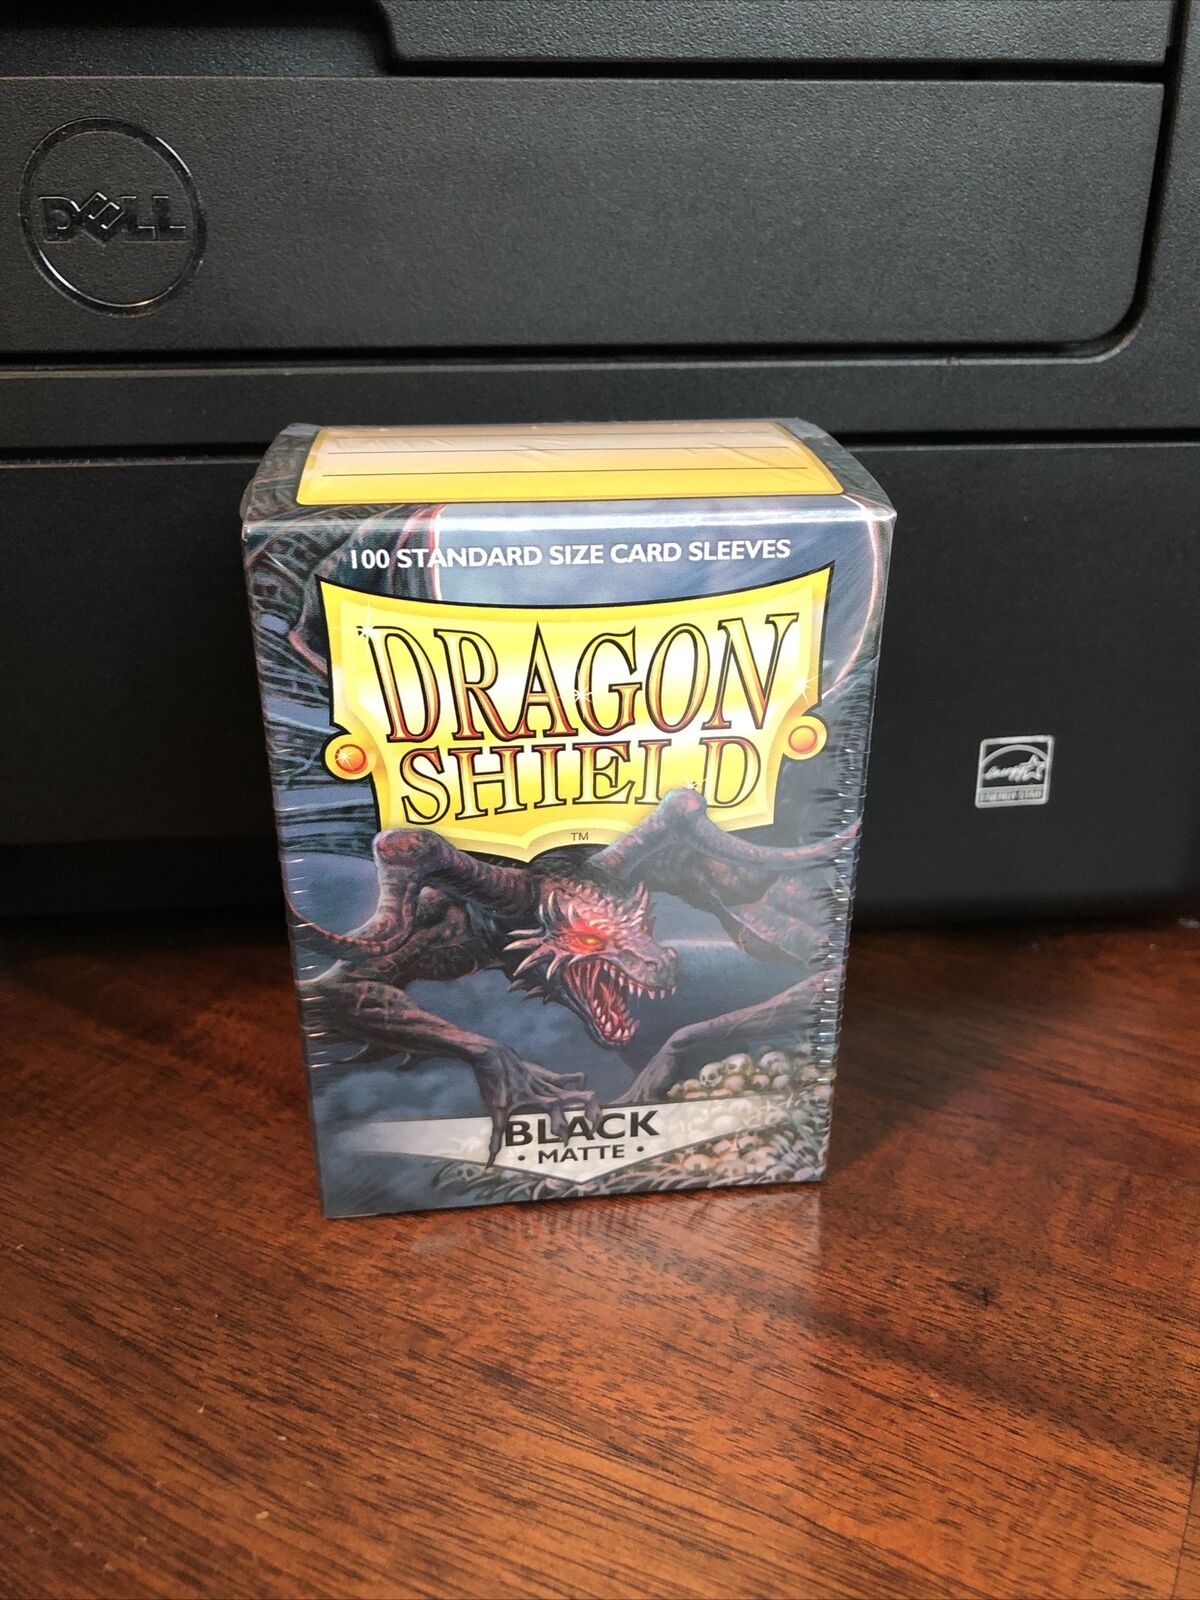 Dragon Shield Sleeves Pack of 100 Standard Size Card Sleeves Black Matte